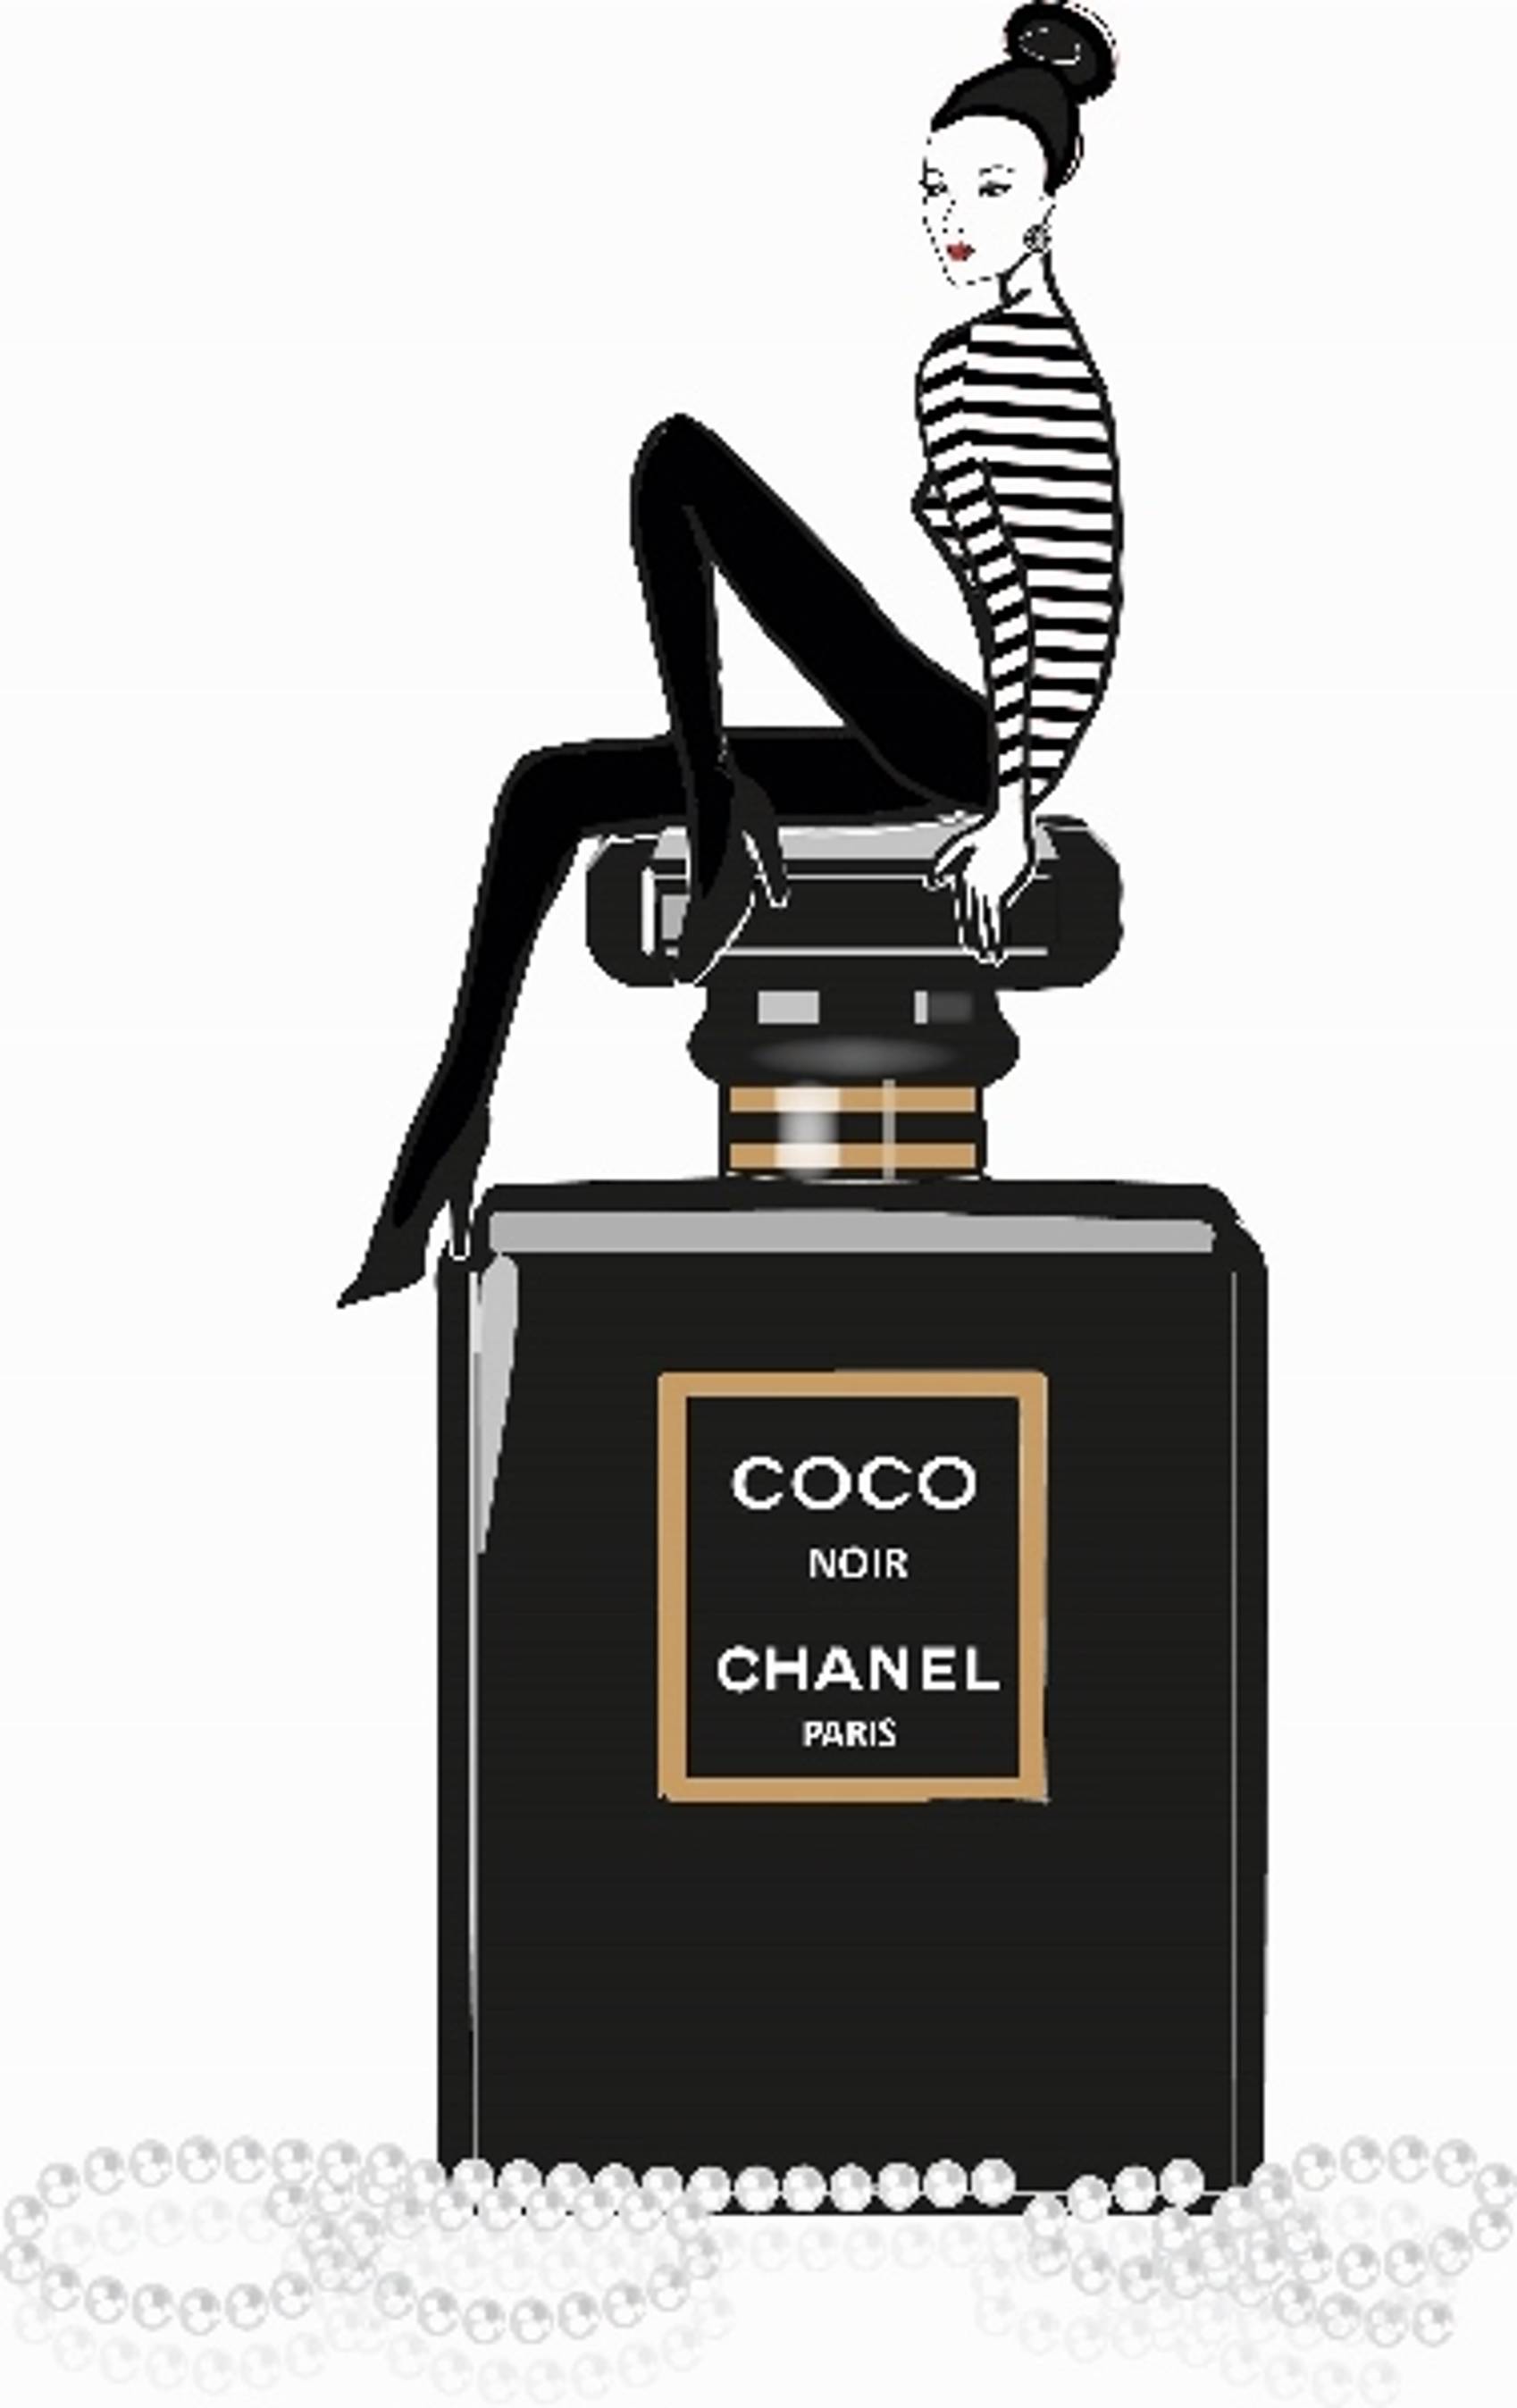 Coco Chanel Noir - Worldwide Fashion Design Lookbook